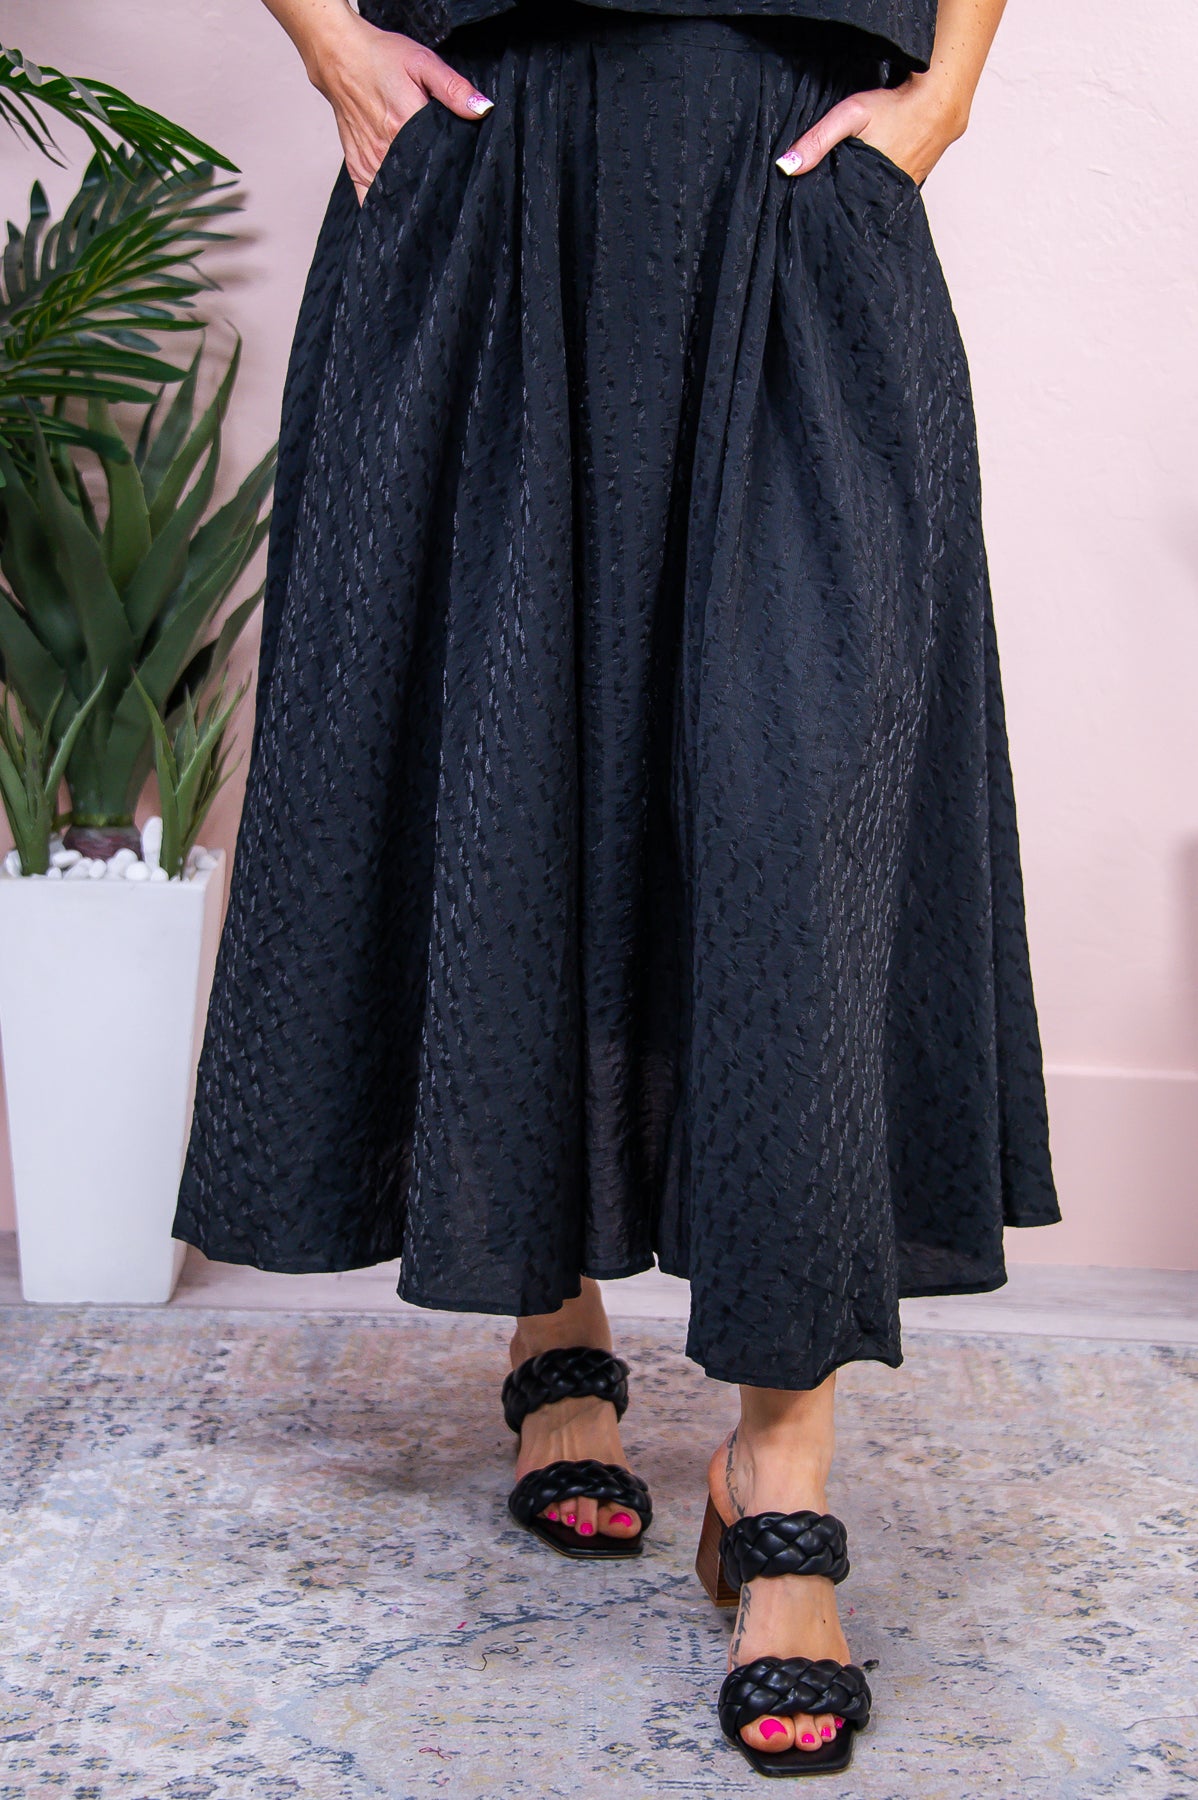 Fancy Idea Black Solid Skirt - E1133BK